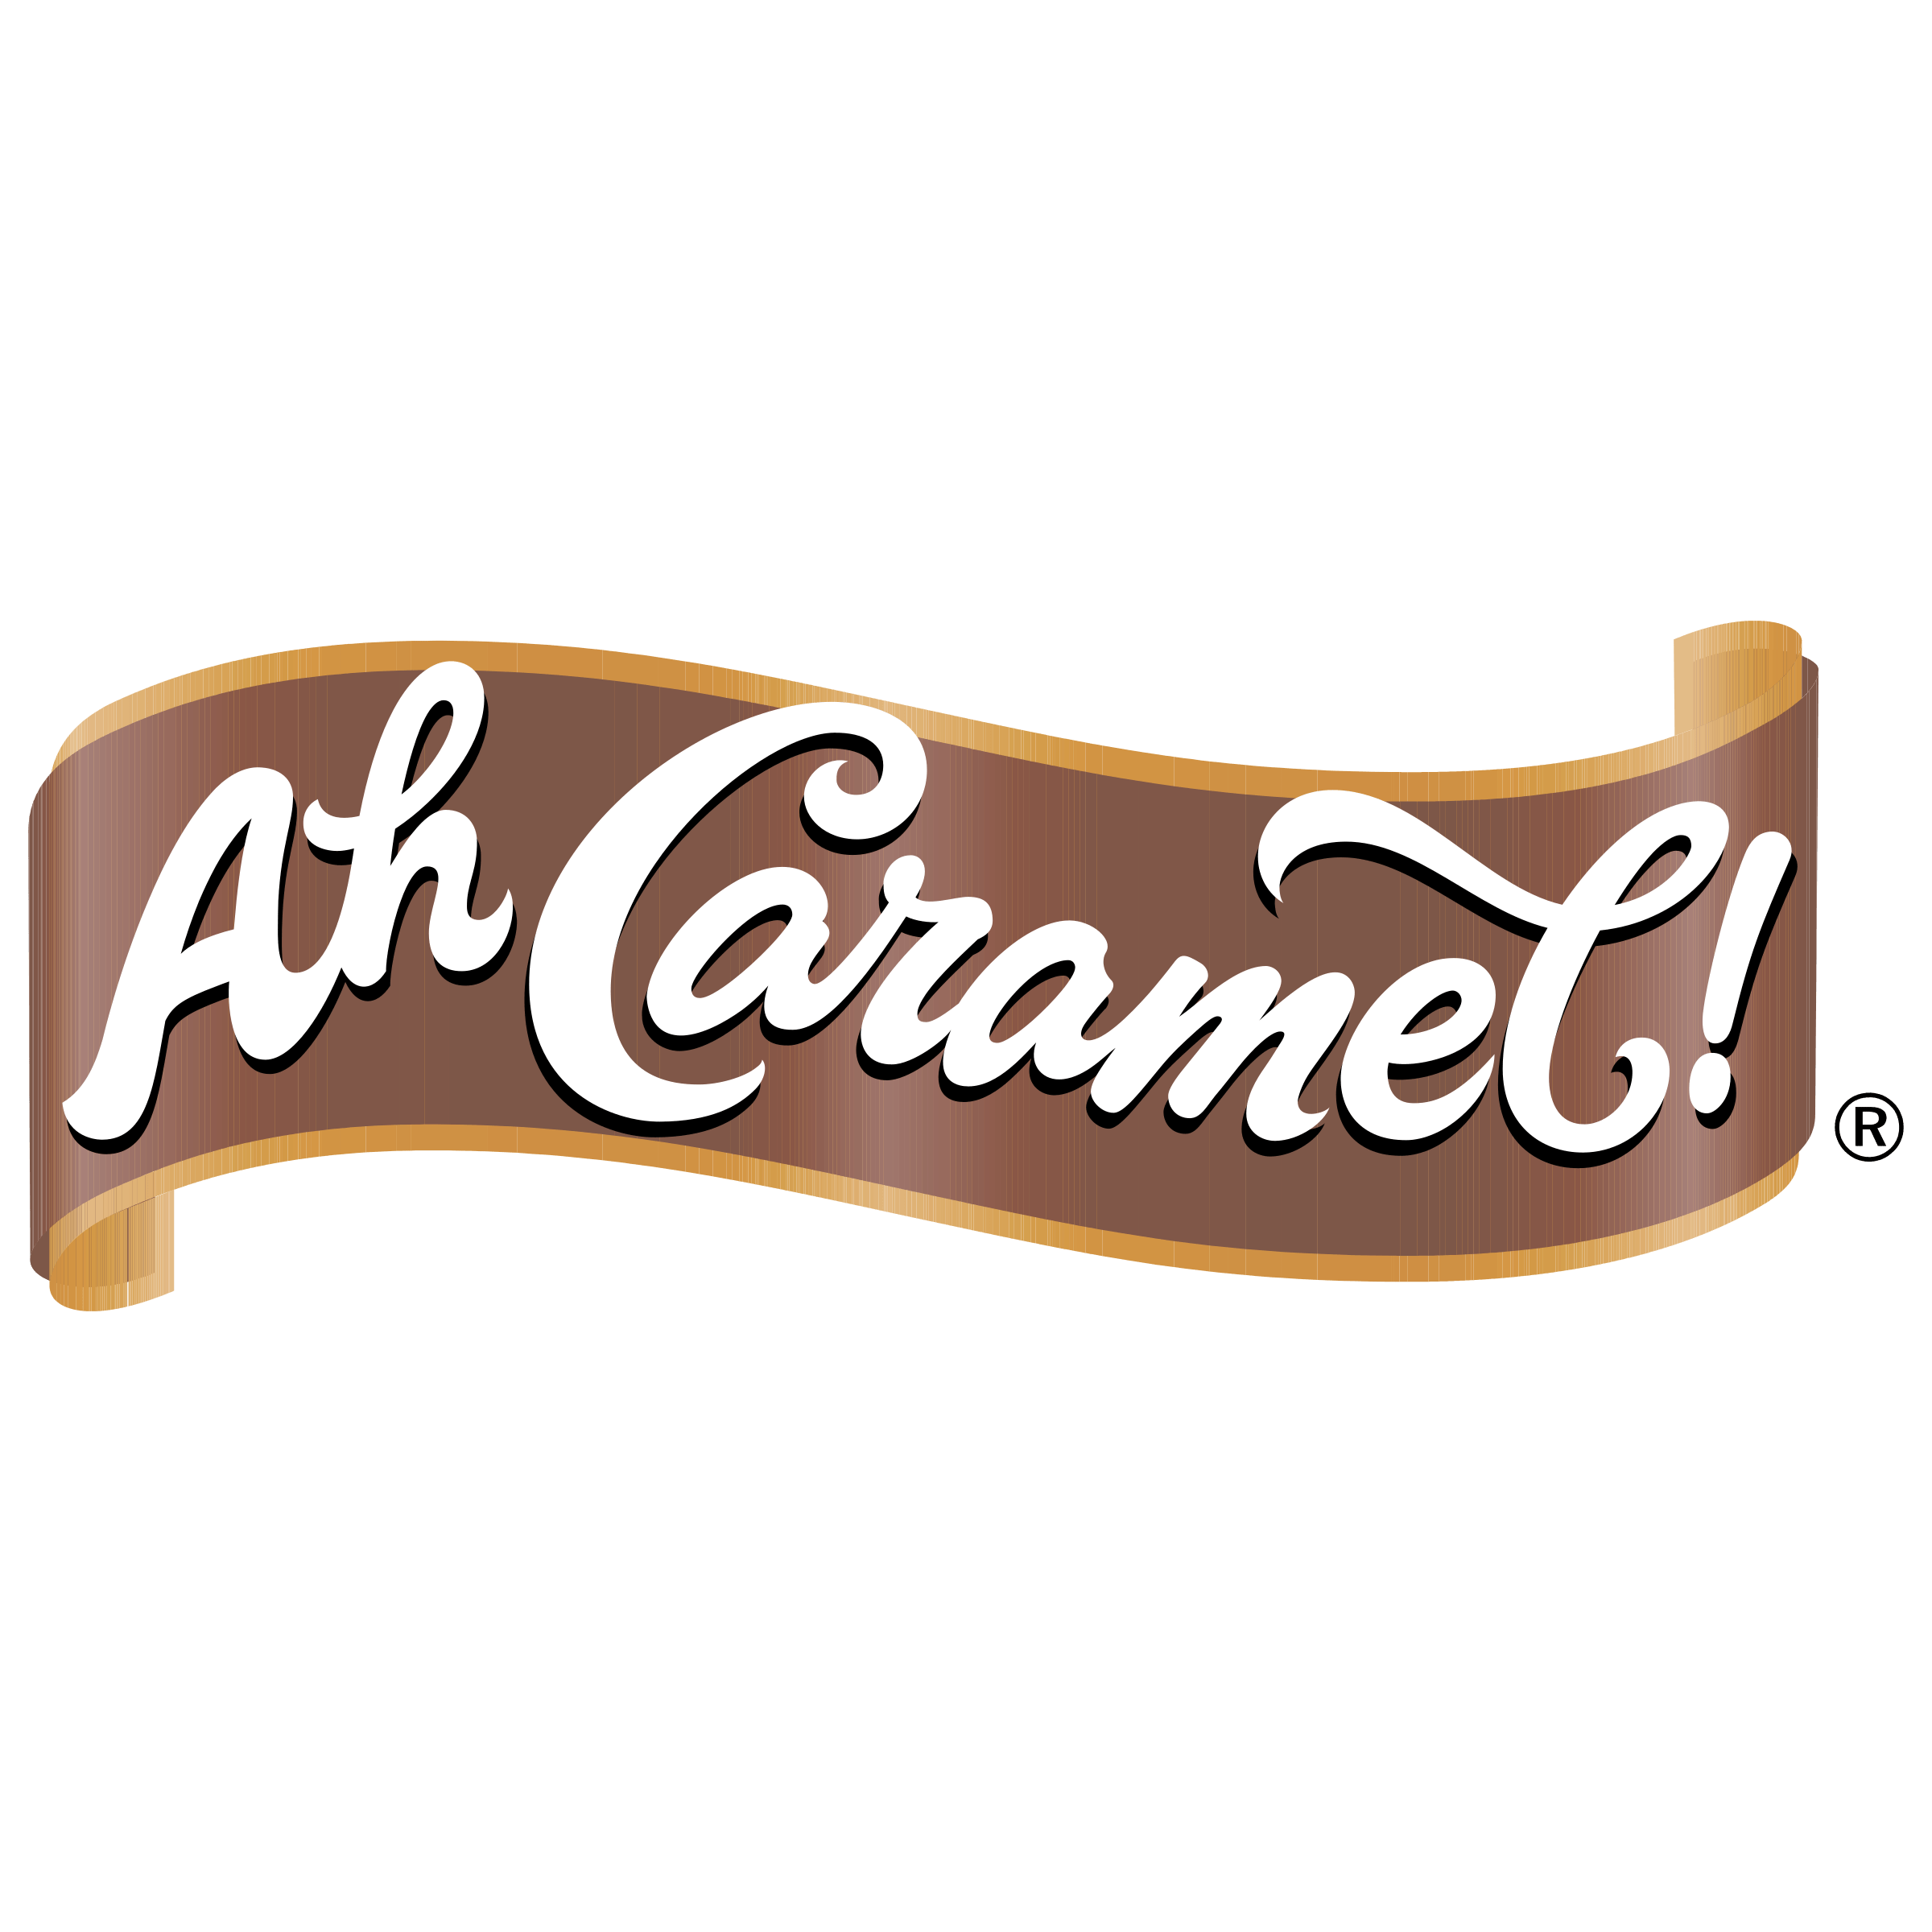 Caramel Logo - Ah Caramel Logo PNG Transparent & SVG Vector - Freebie Supply